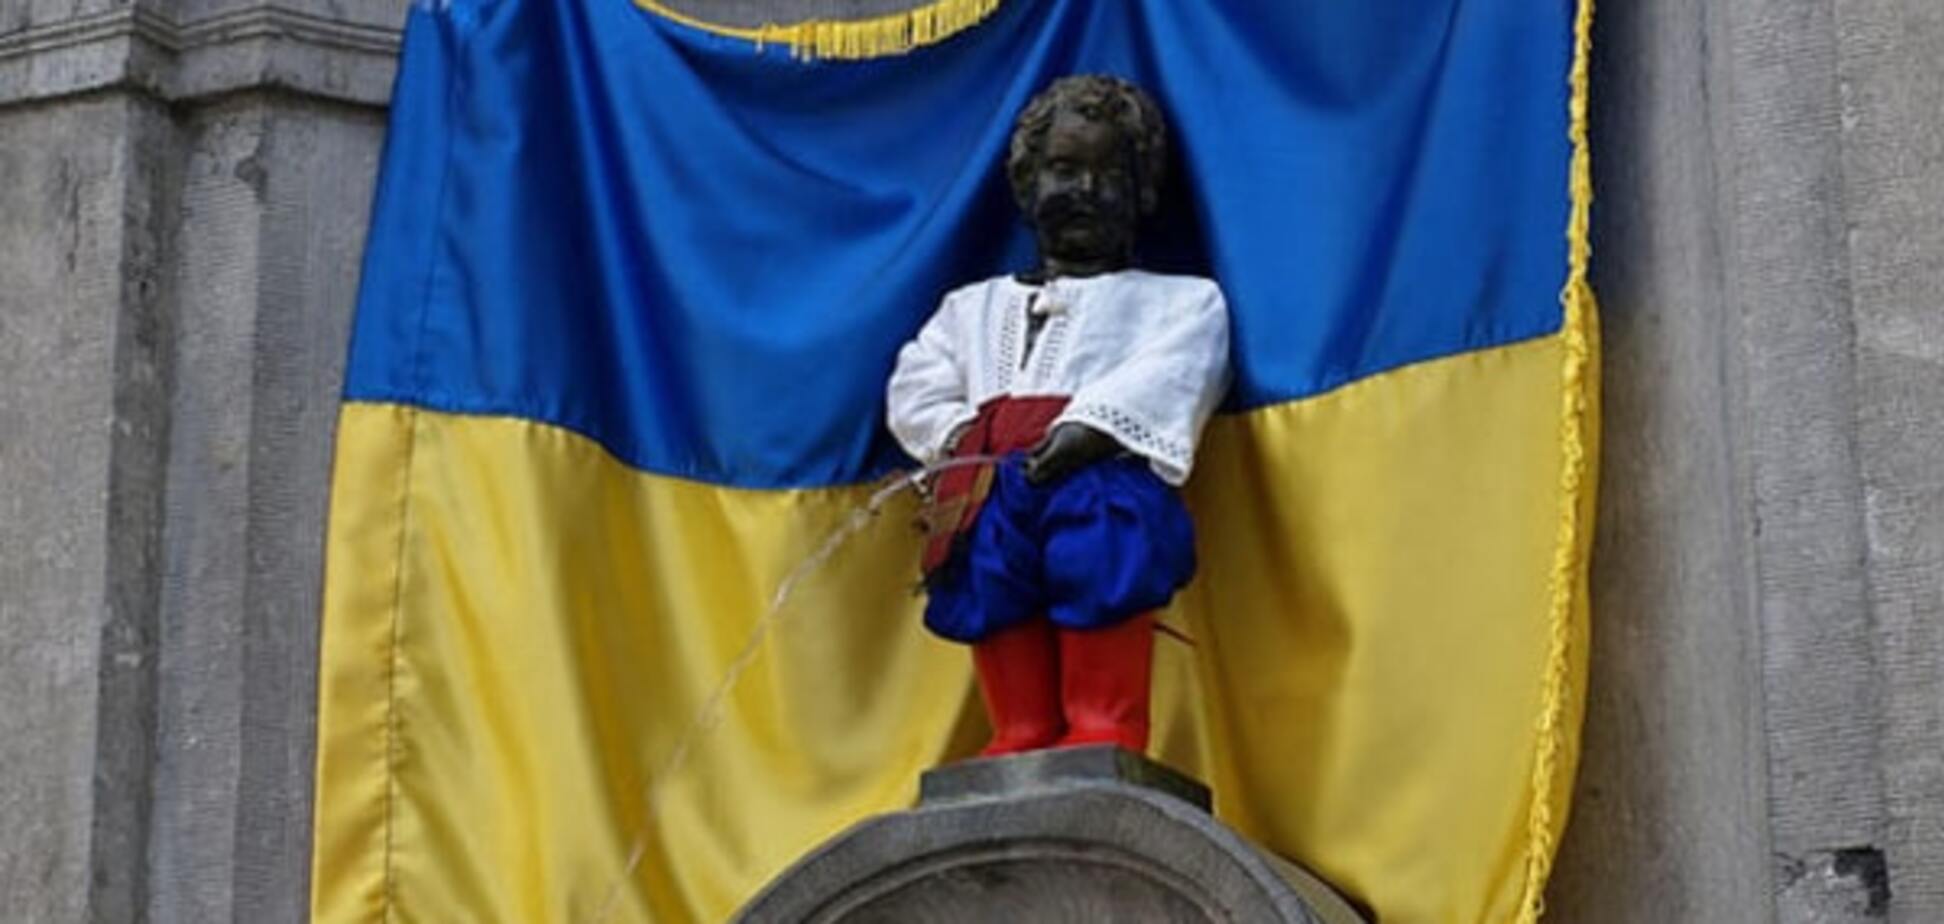 У Брюсселі пісяючого хлопчика одягнуть у костюм українського козака